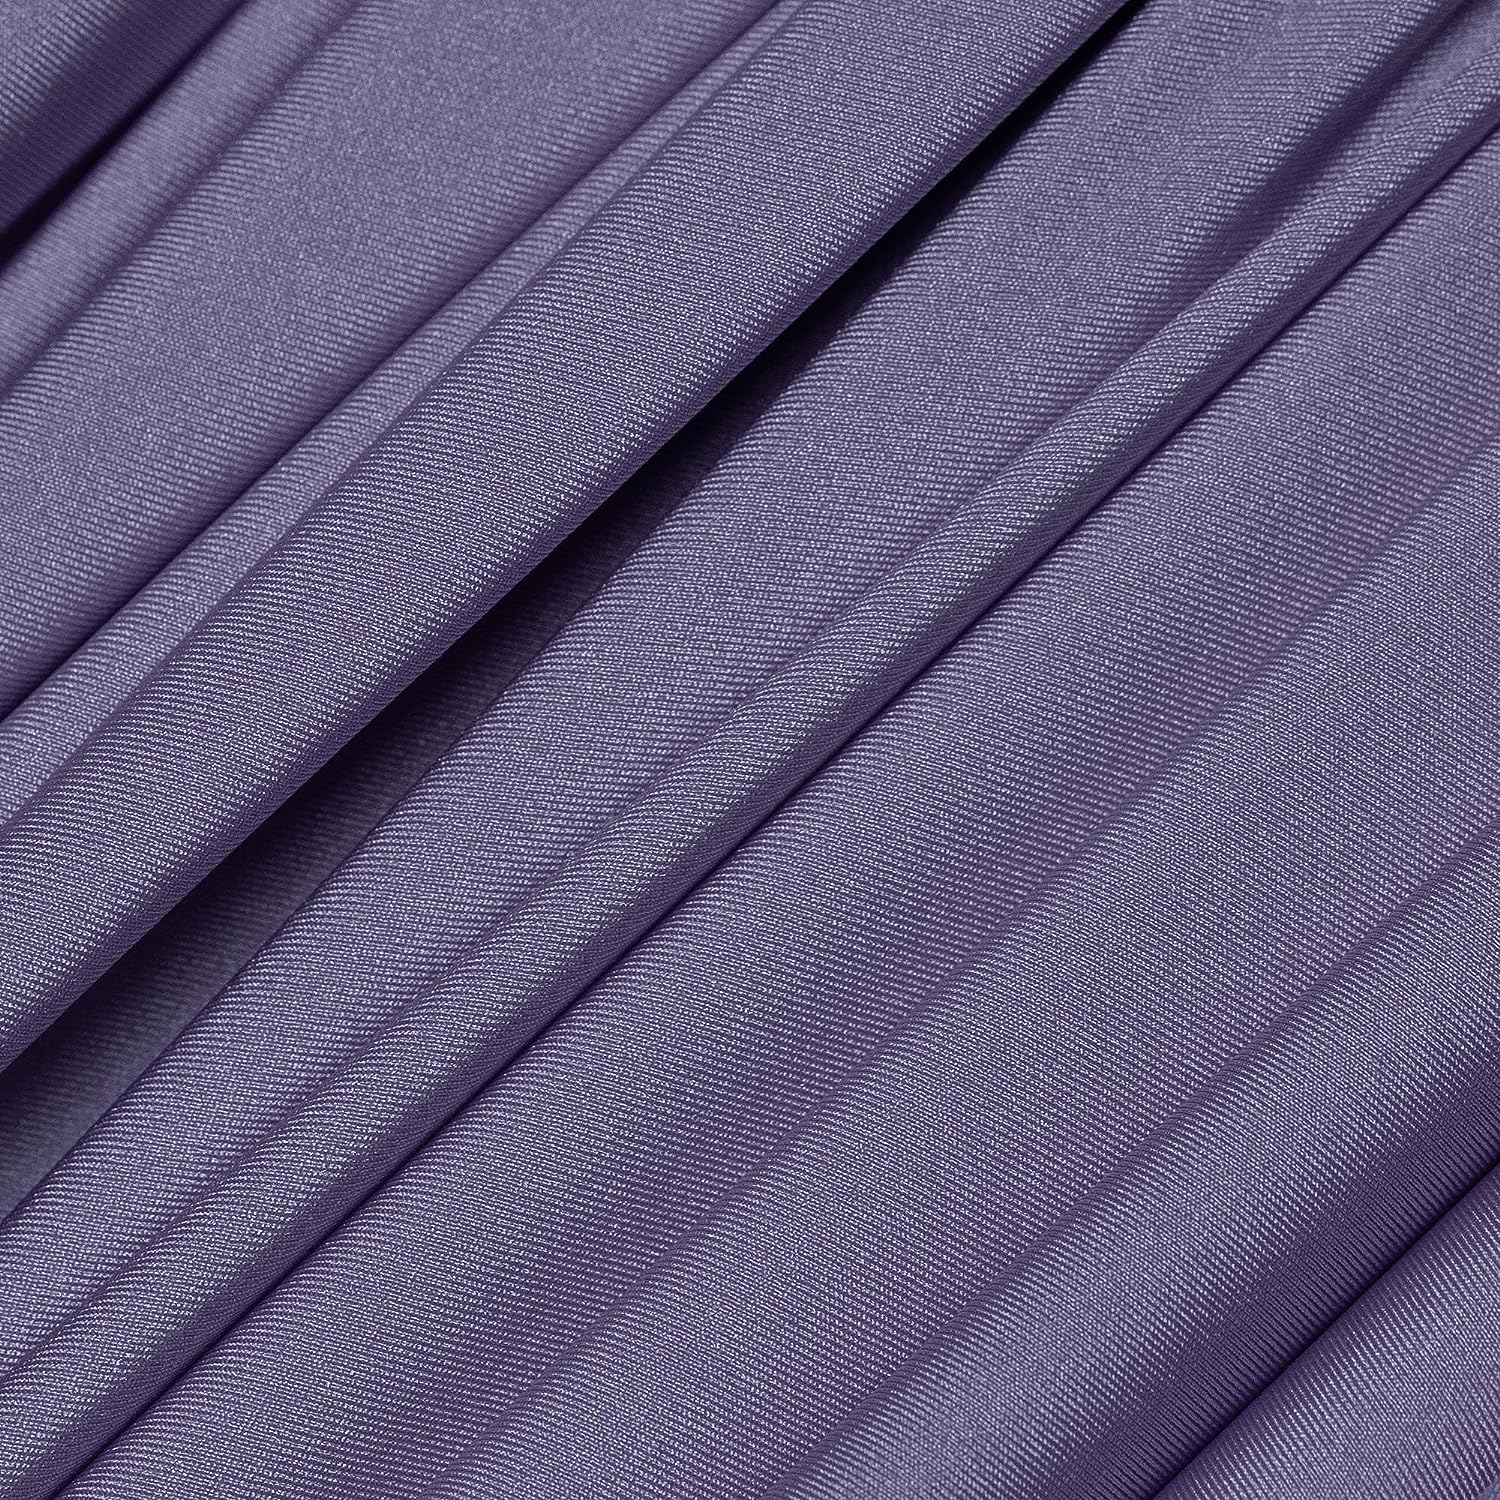 Swimwear Fabric Light Violet Spandex Fabric Material Nylon Spandex